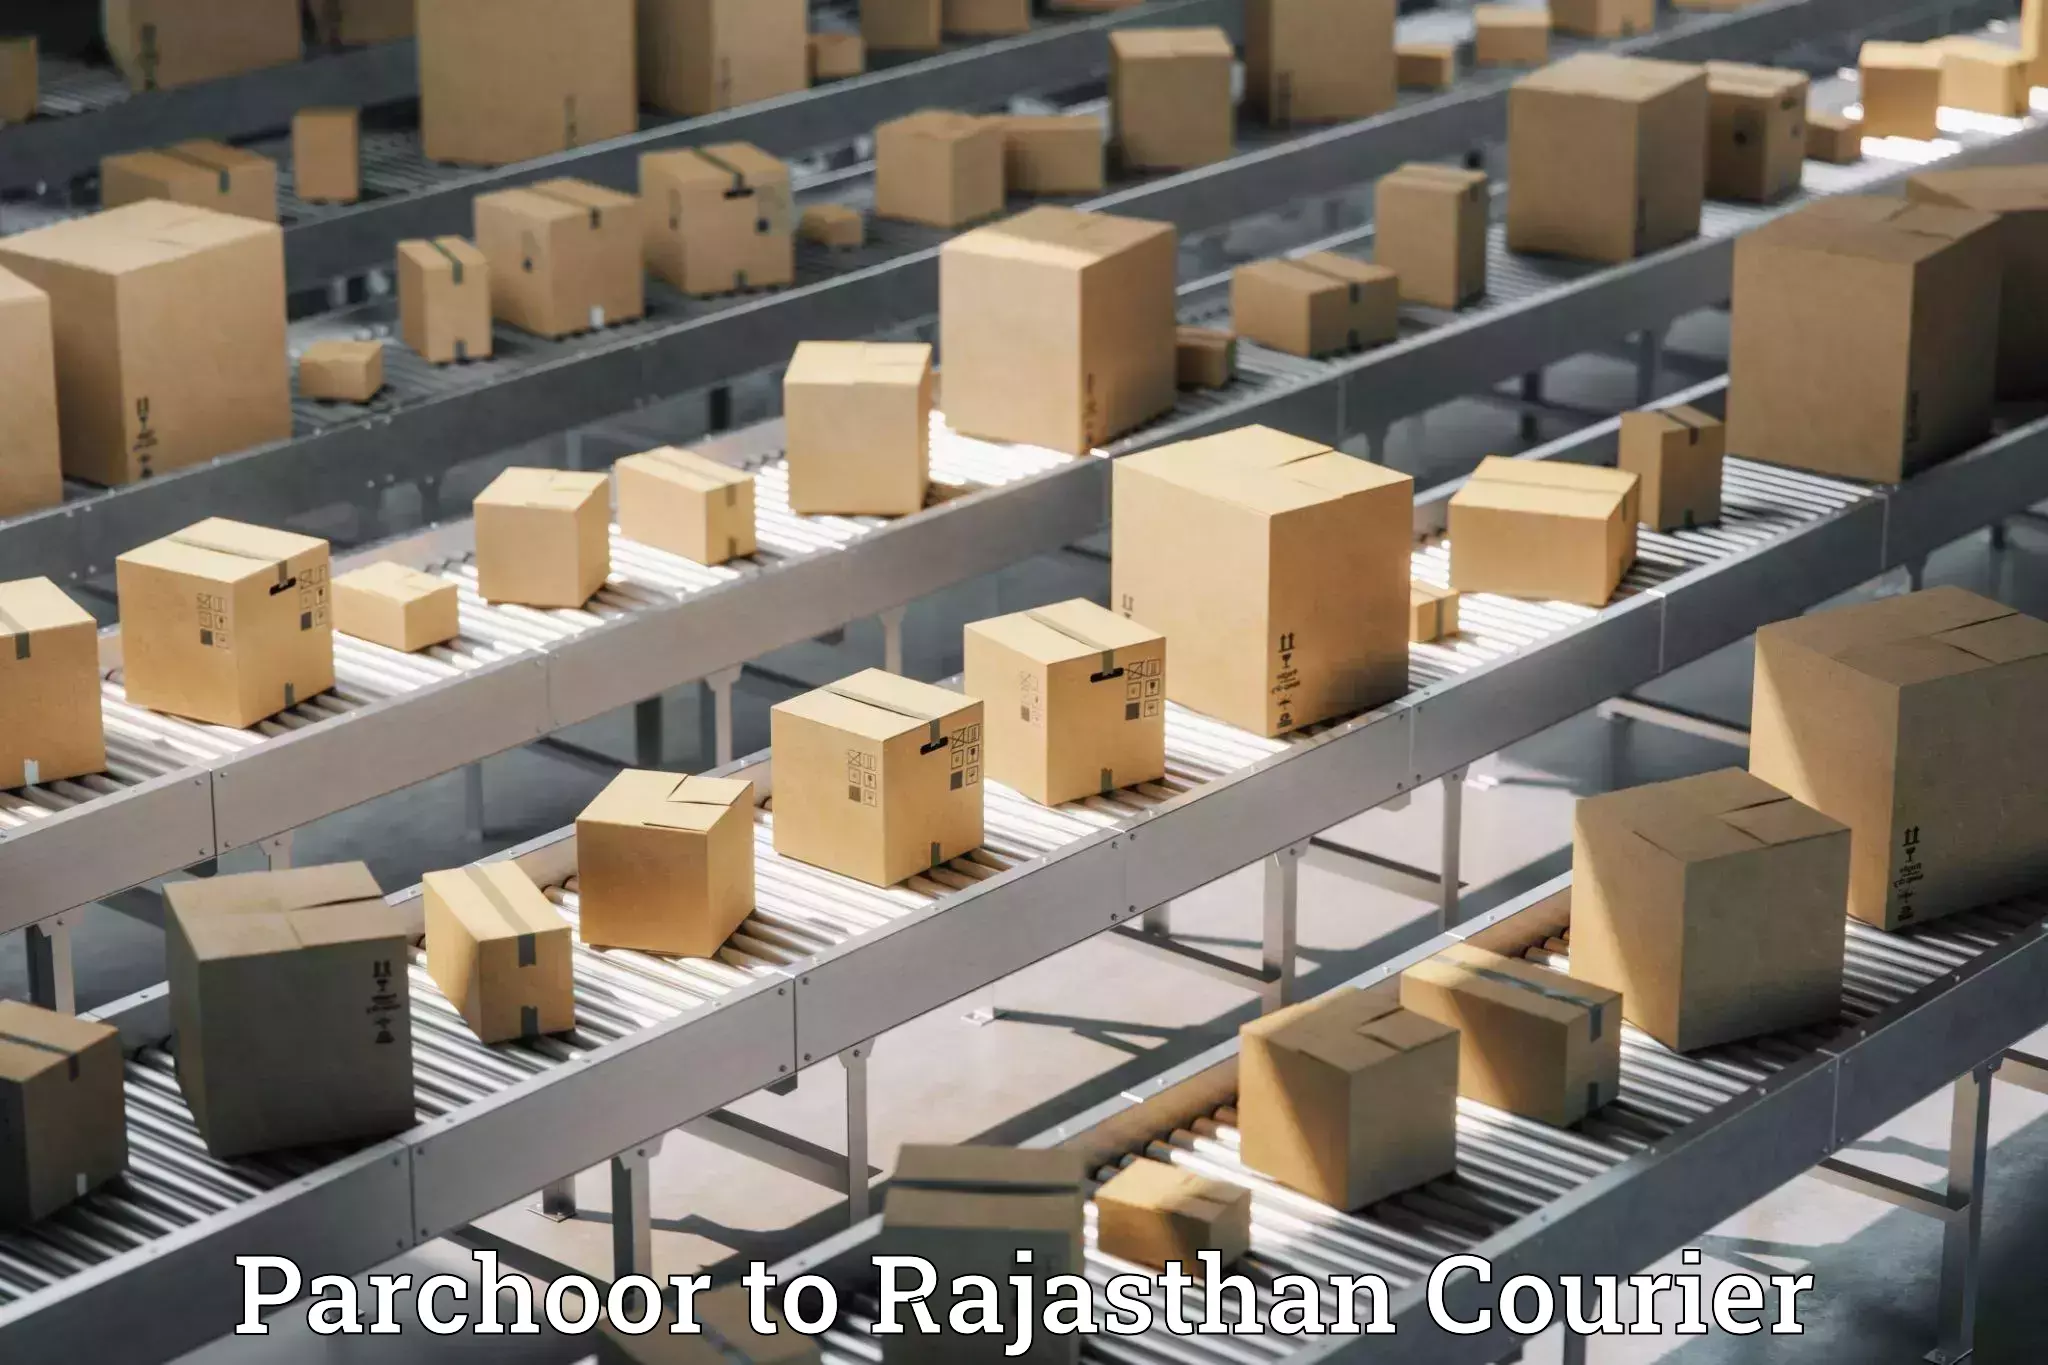 Comprehensive parcel tracking Parchoor to Jaipur